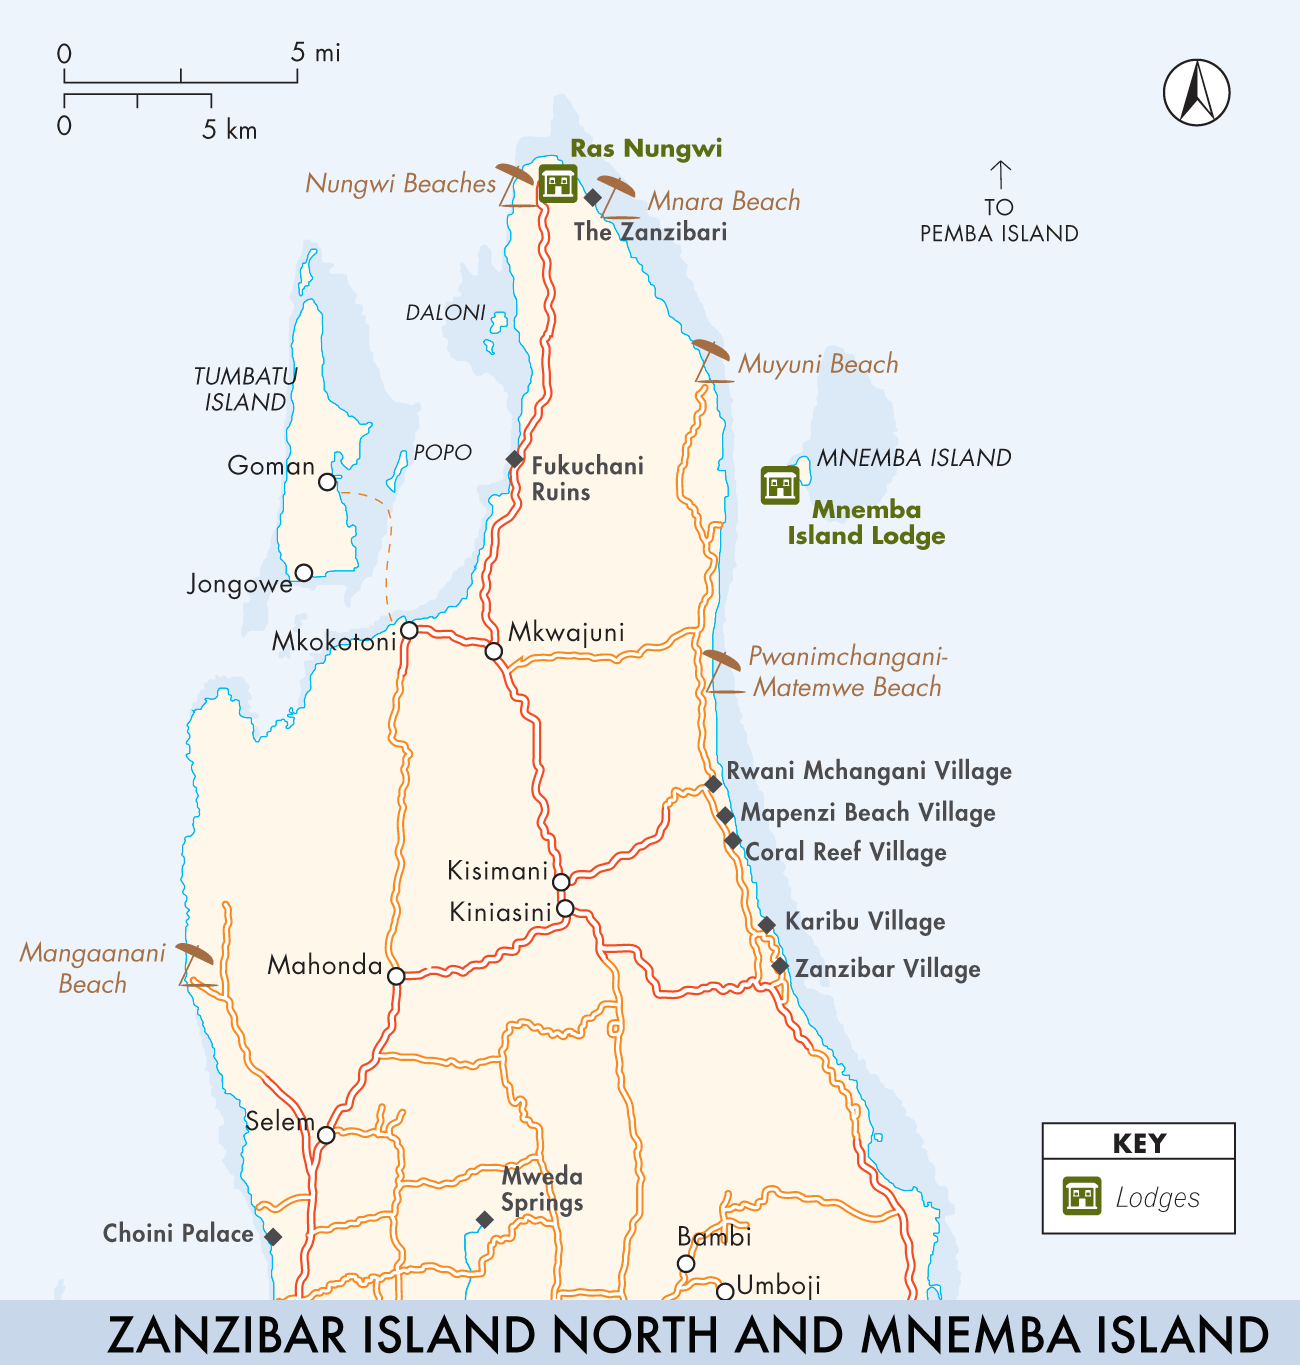 Zanzibar Island North and Mnemba Island